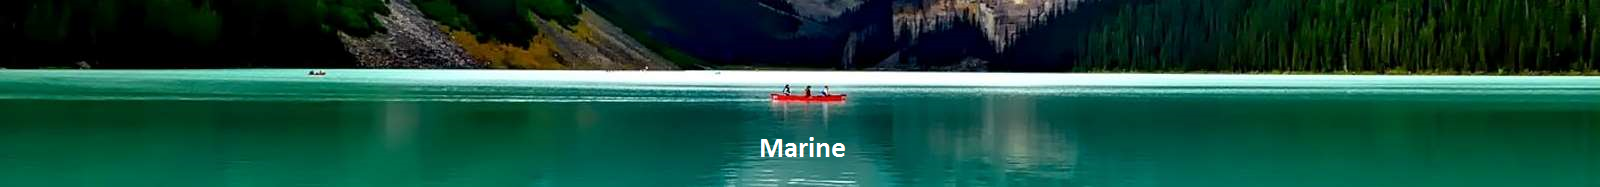 marine2.bmp